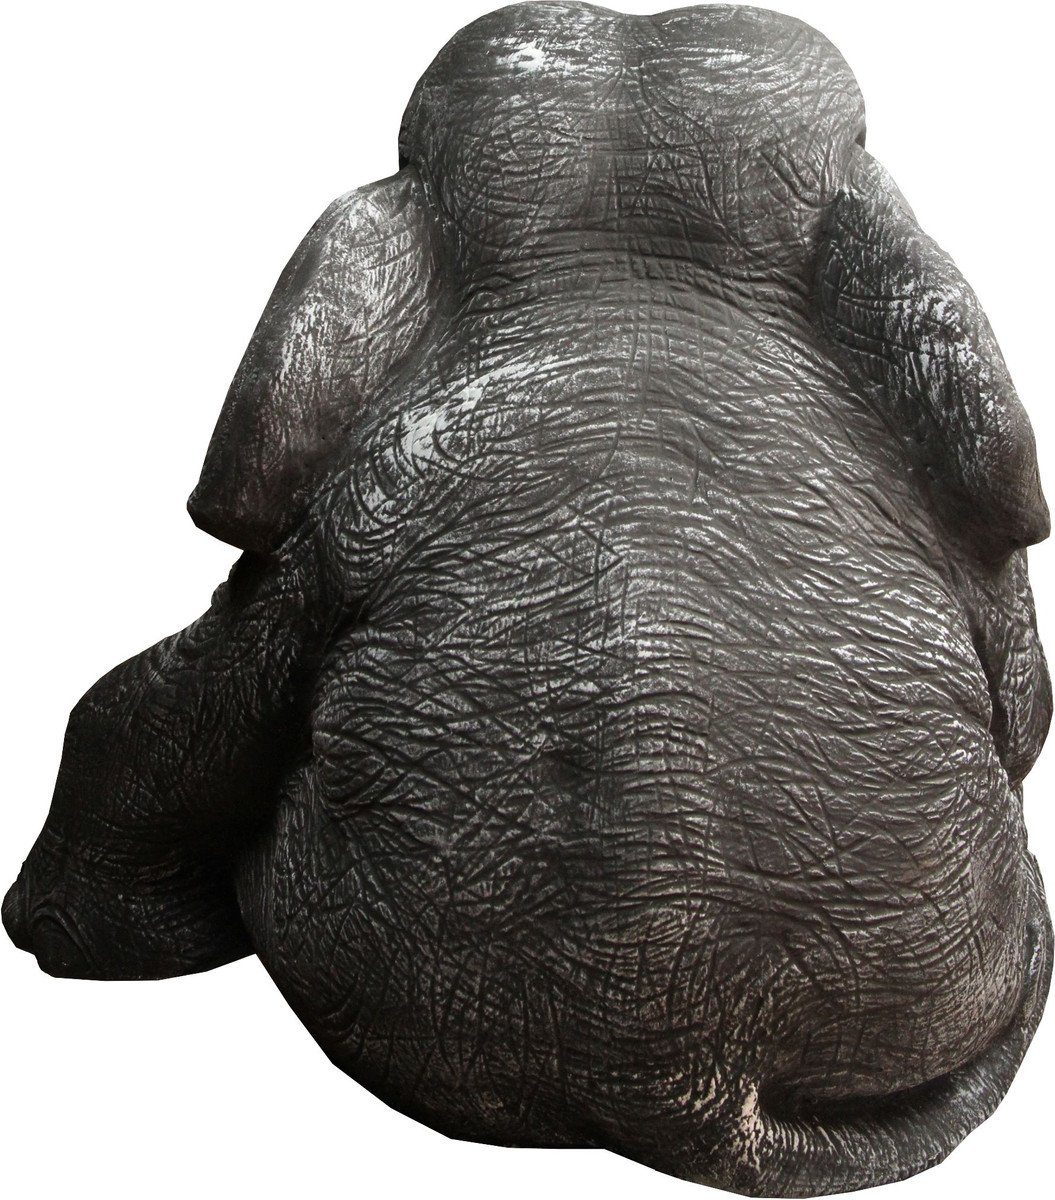 Casa cm Skulptur Limited Dekofigur 53 Casa Elefant Padrino Dunkelgrau x H. Luxus Padrino Edition x 53 55 -